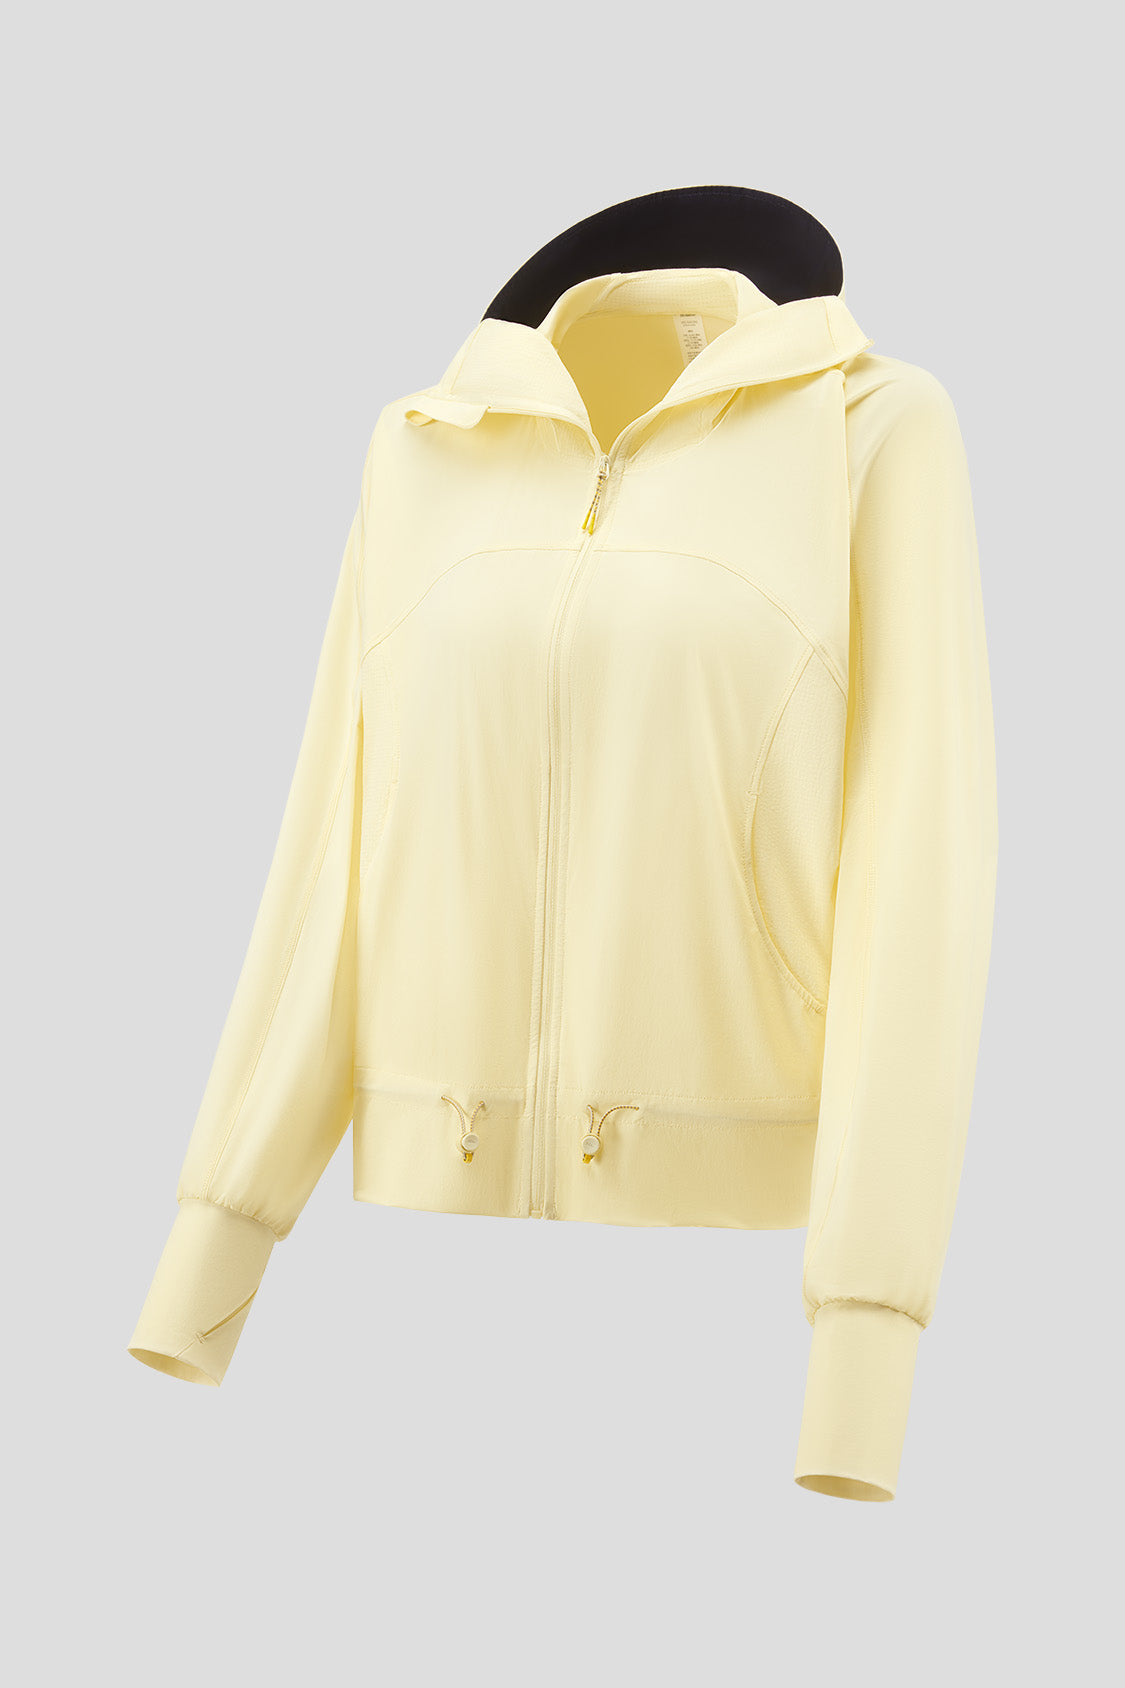 Beneunder Grey Full Zip Cropped UPF 50+ Athletic Jacket Women's Size M Size  M - $30 - From Taylor